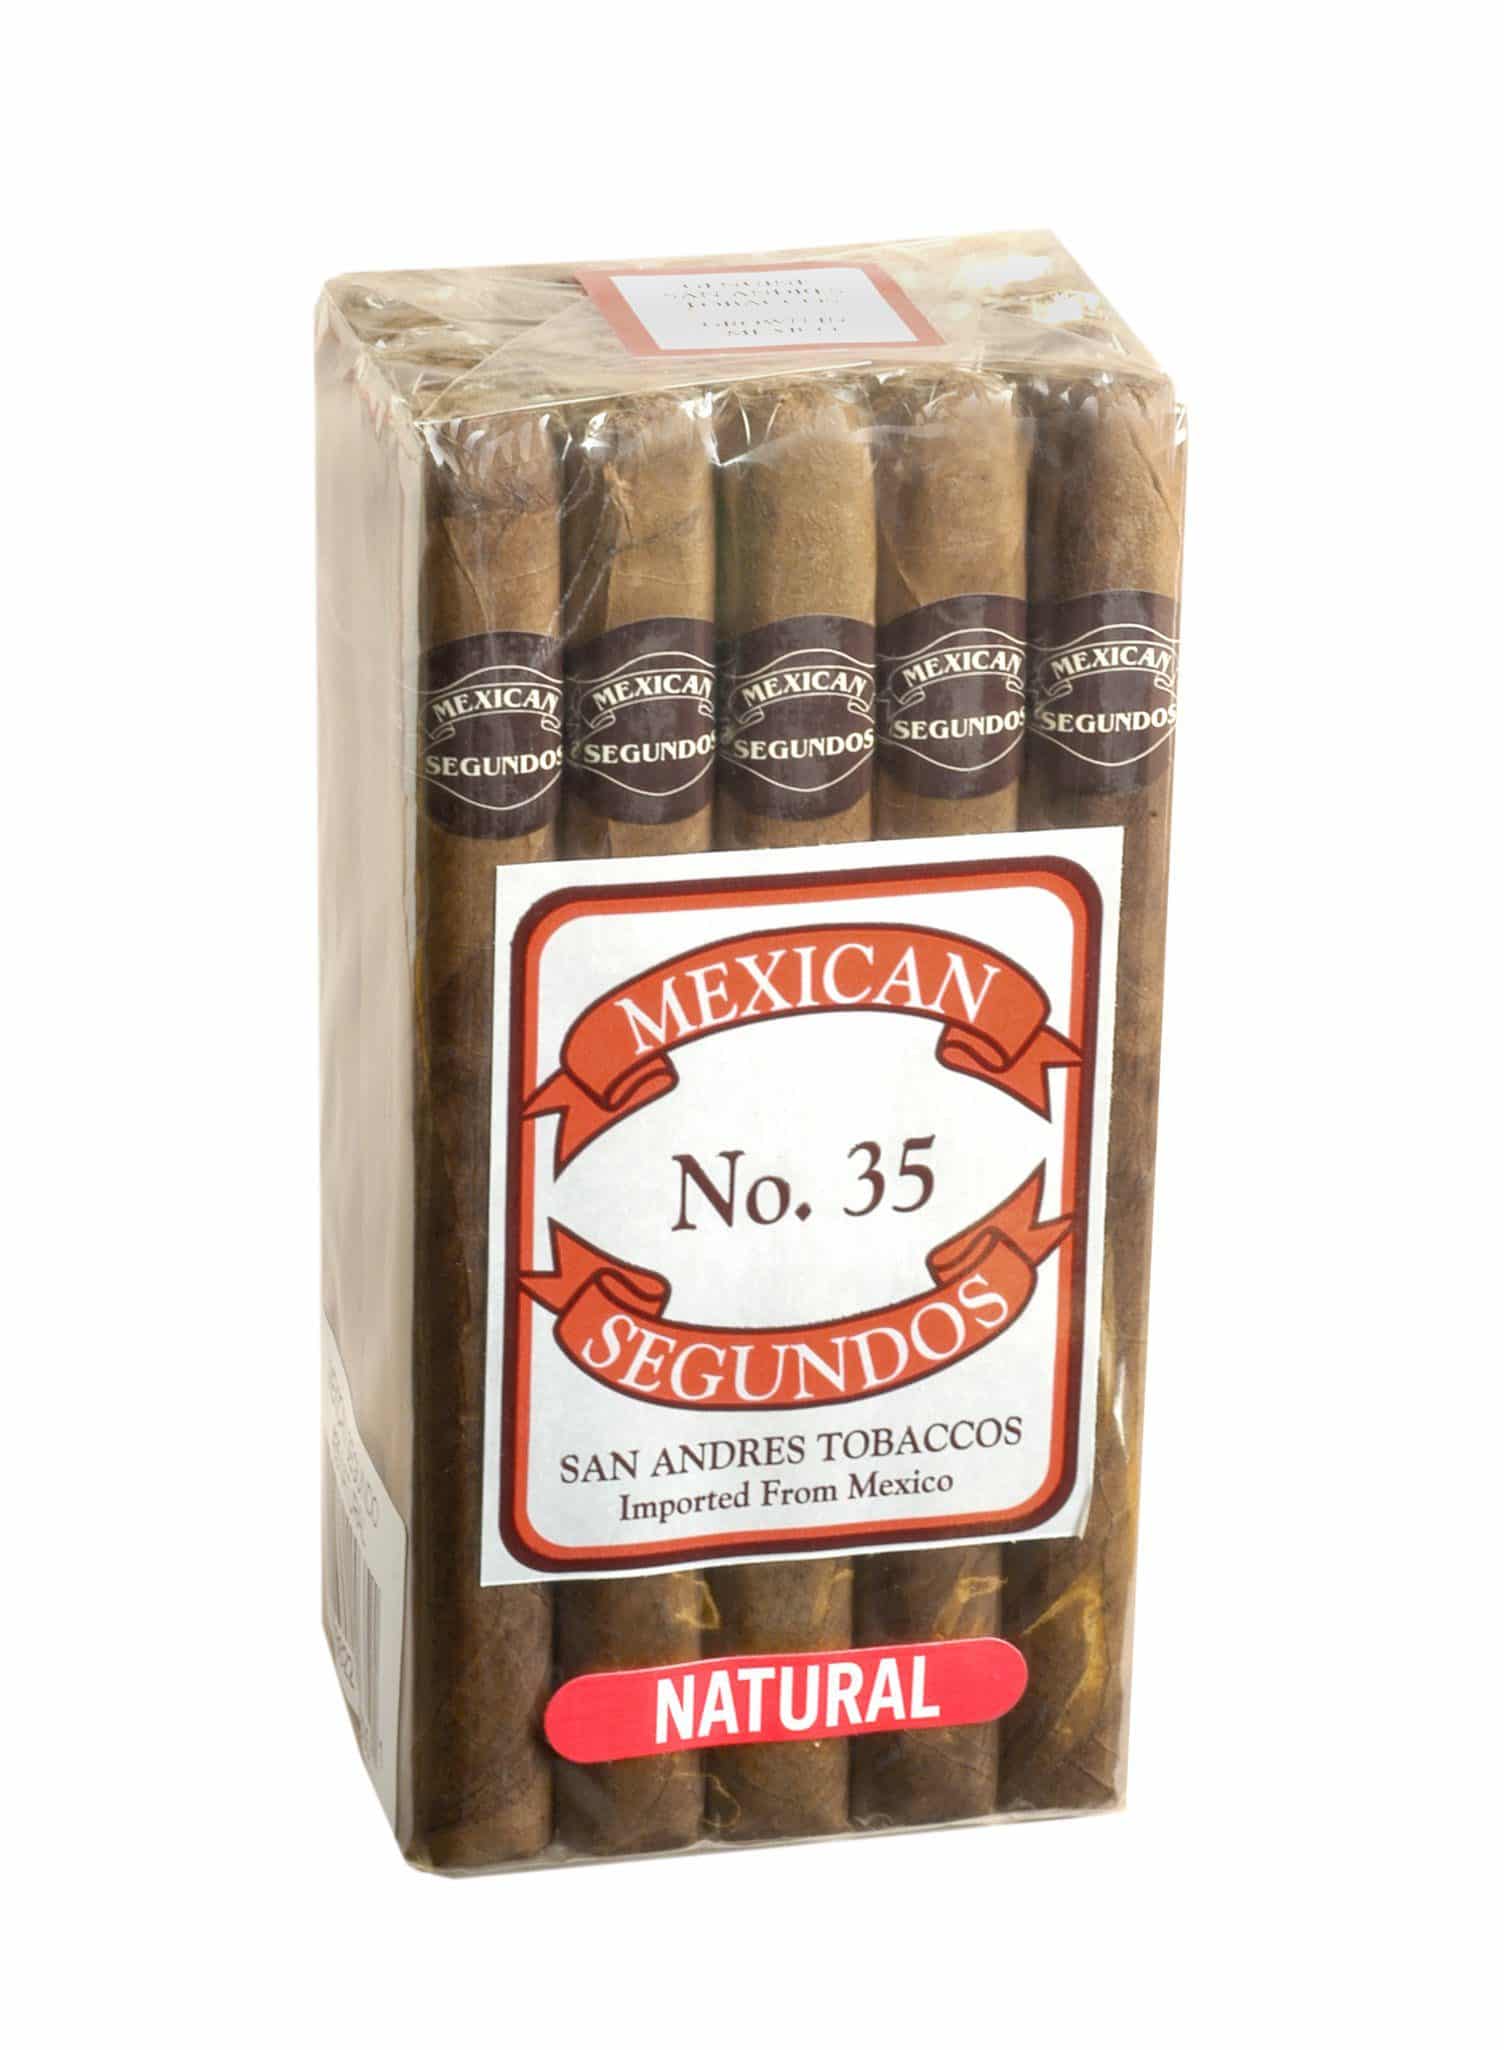 mexican segundos natural number 35 bundle